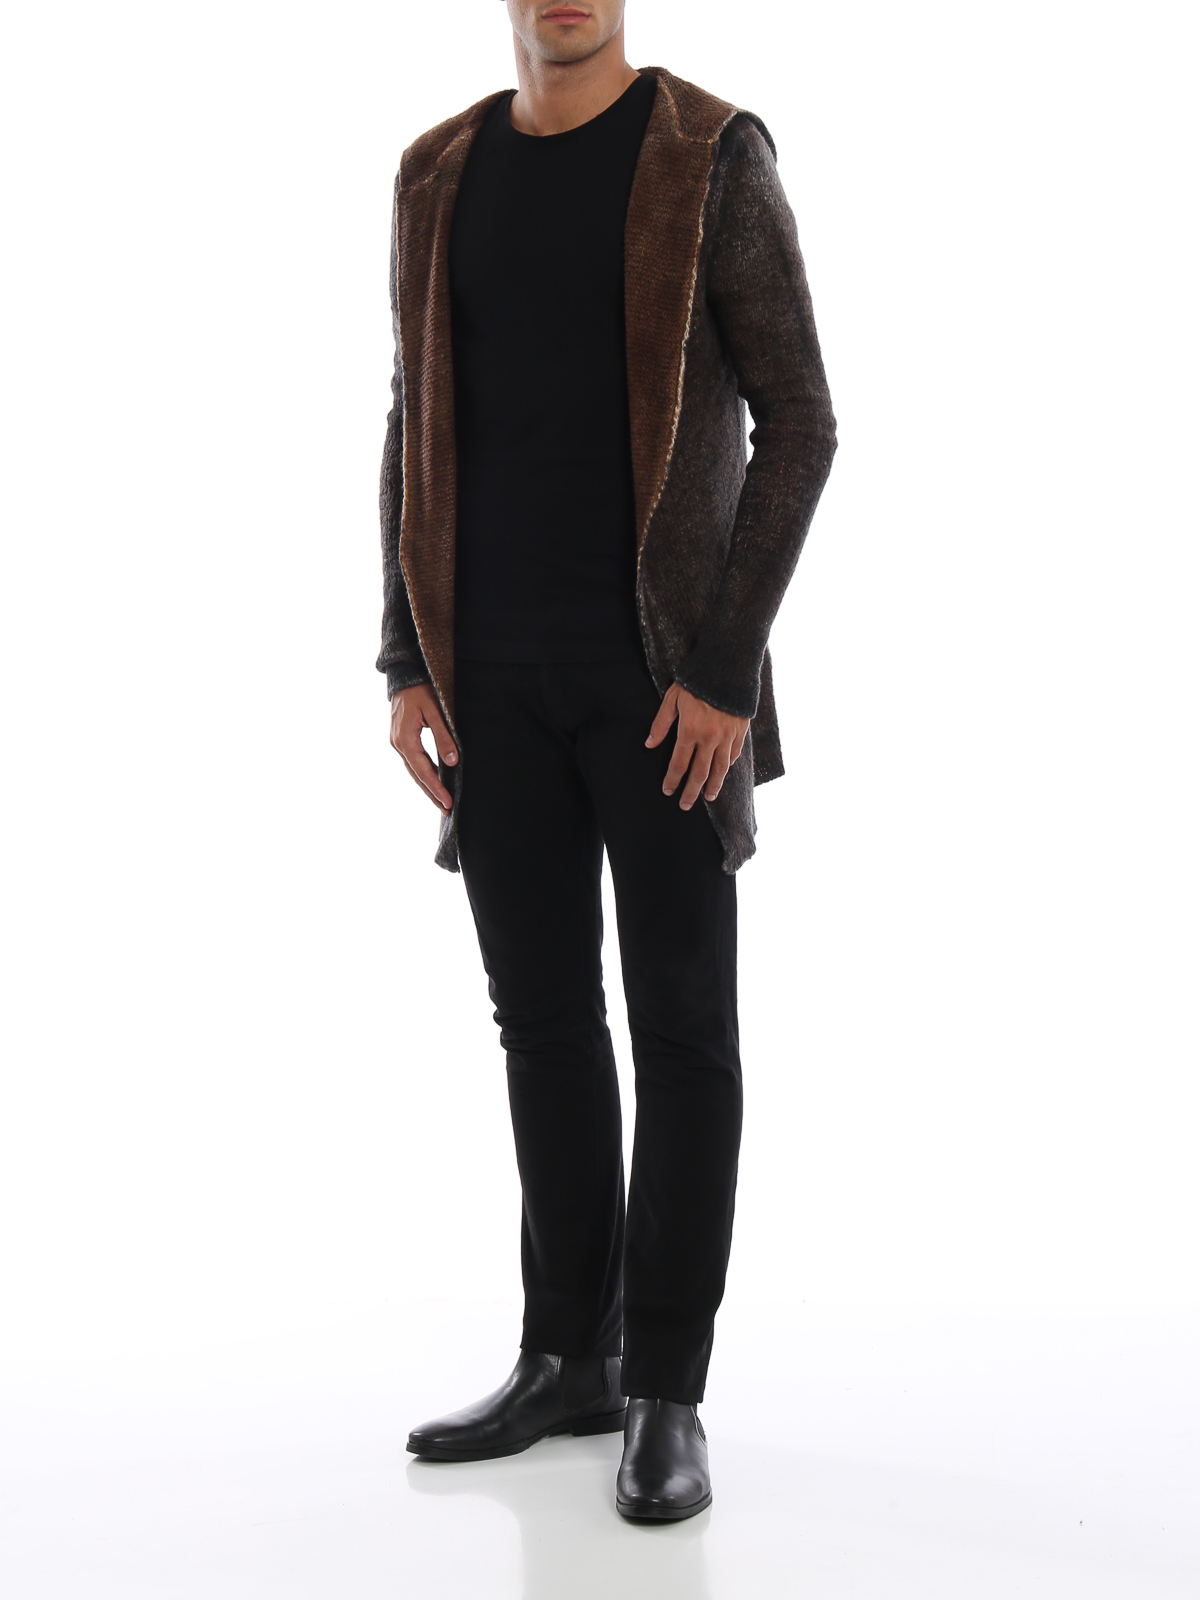 Men's Nero Lamb Leather Reversible to Cashmere Jacket